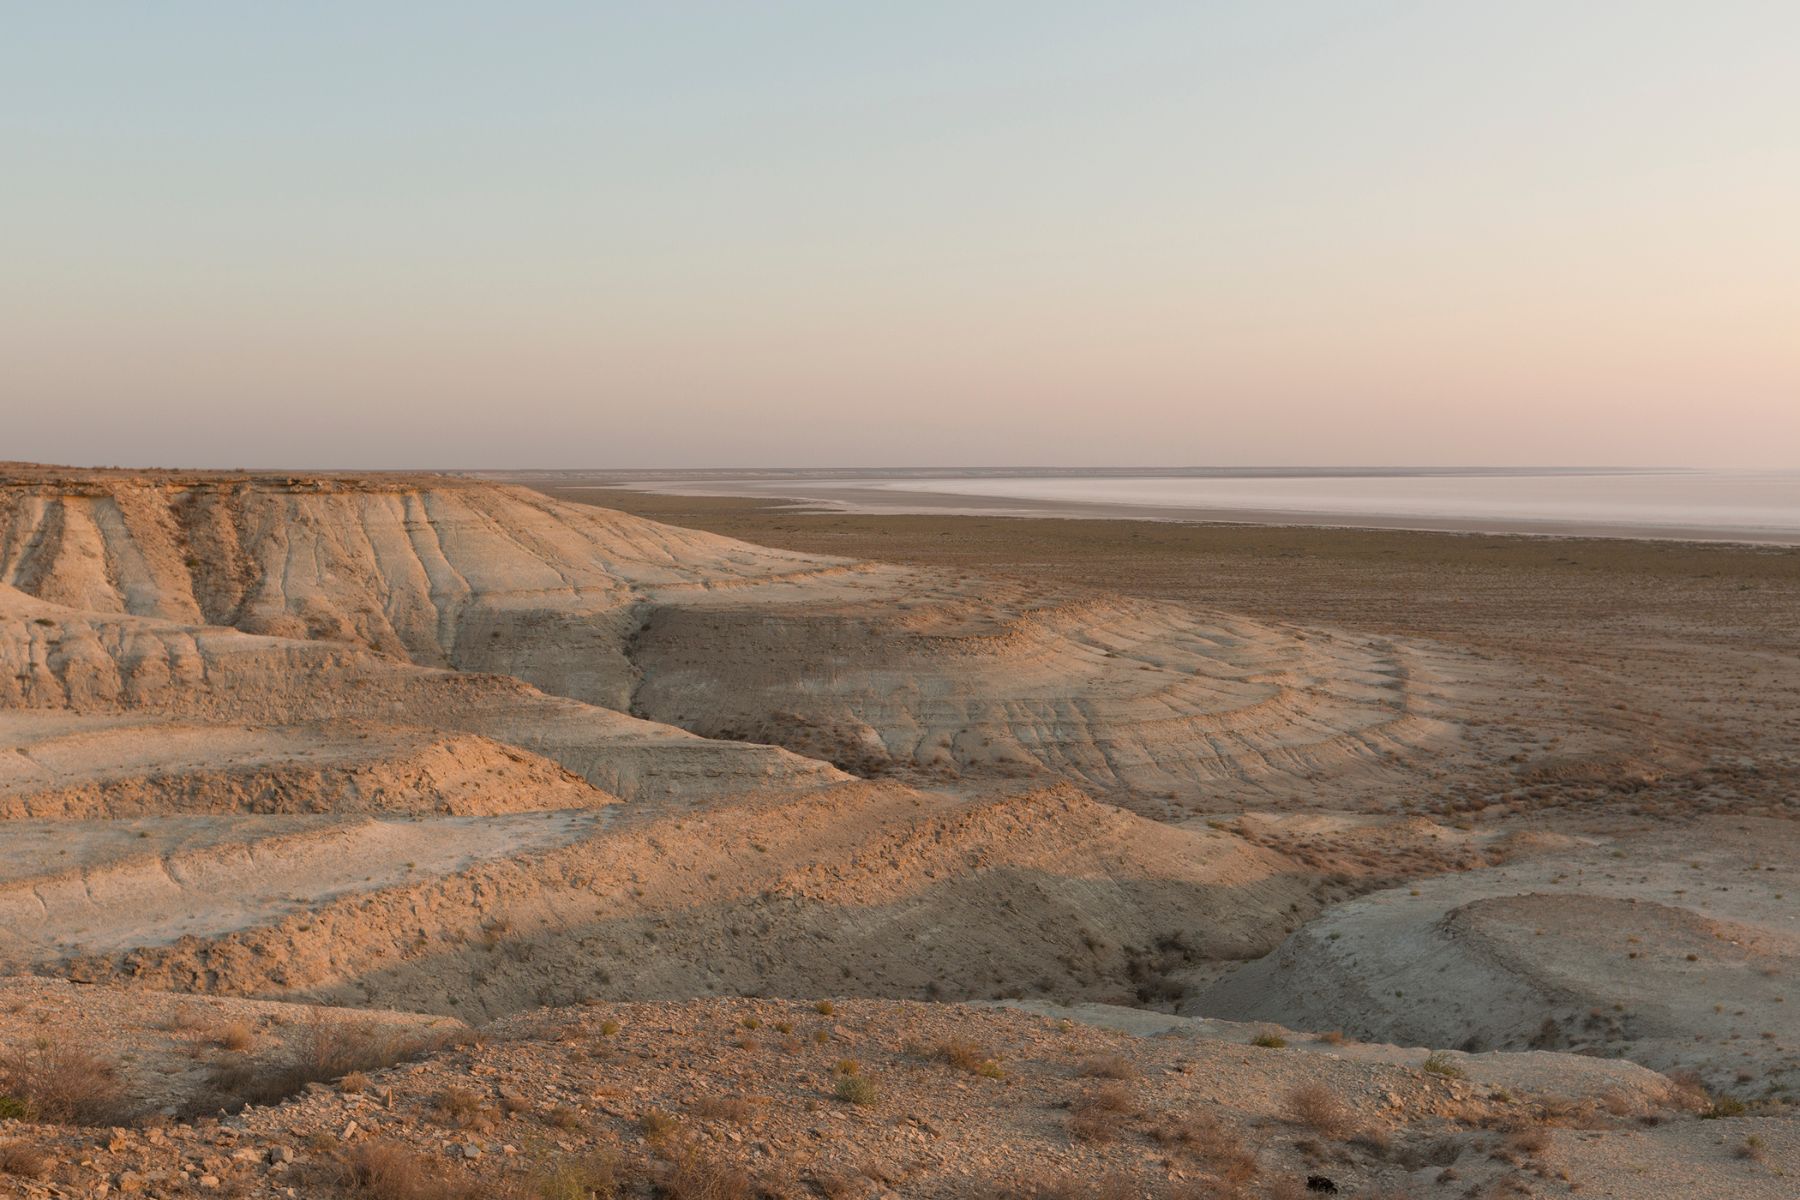 The canyons and cliffs of the Ustyurt Plateau on the Aral Sea, Karakalpakstan